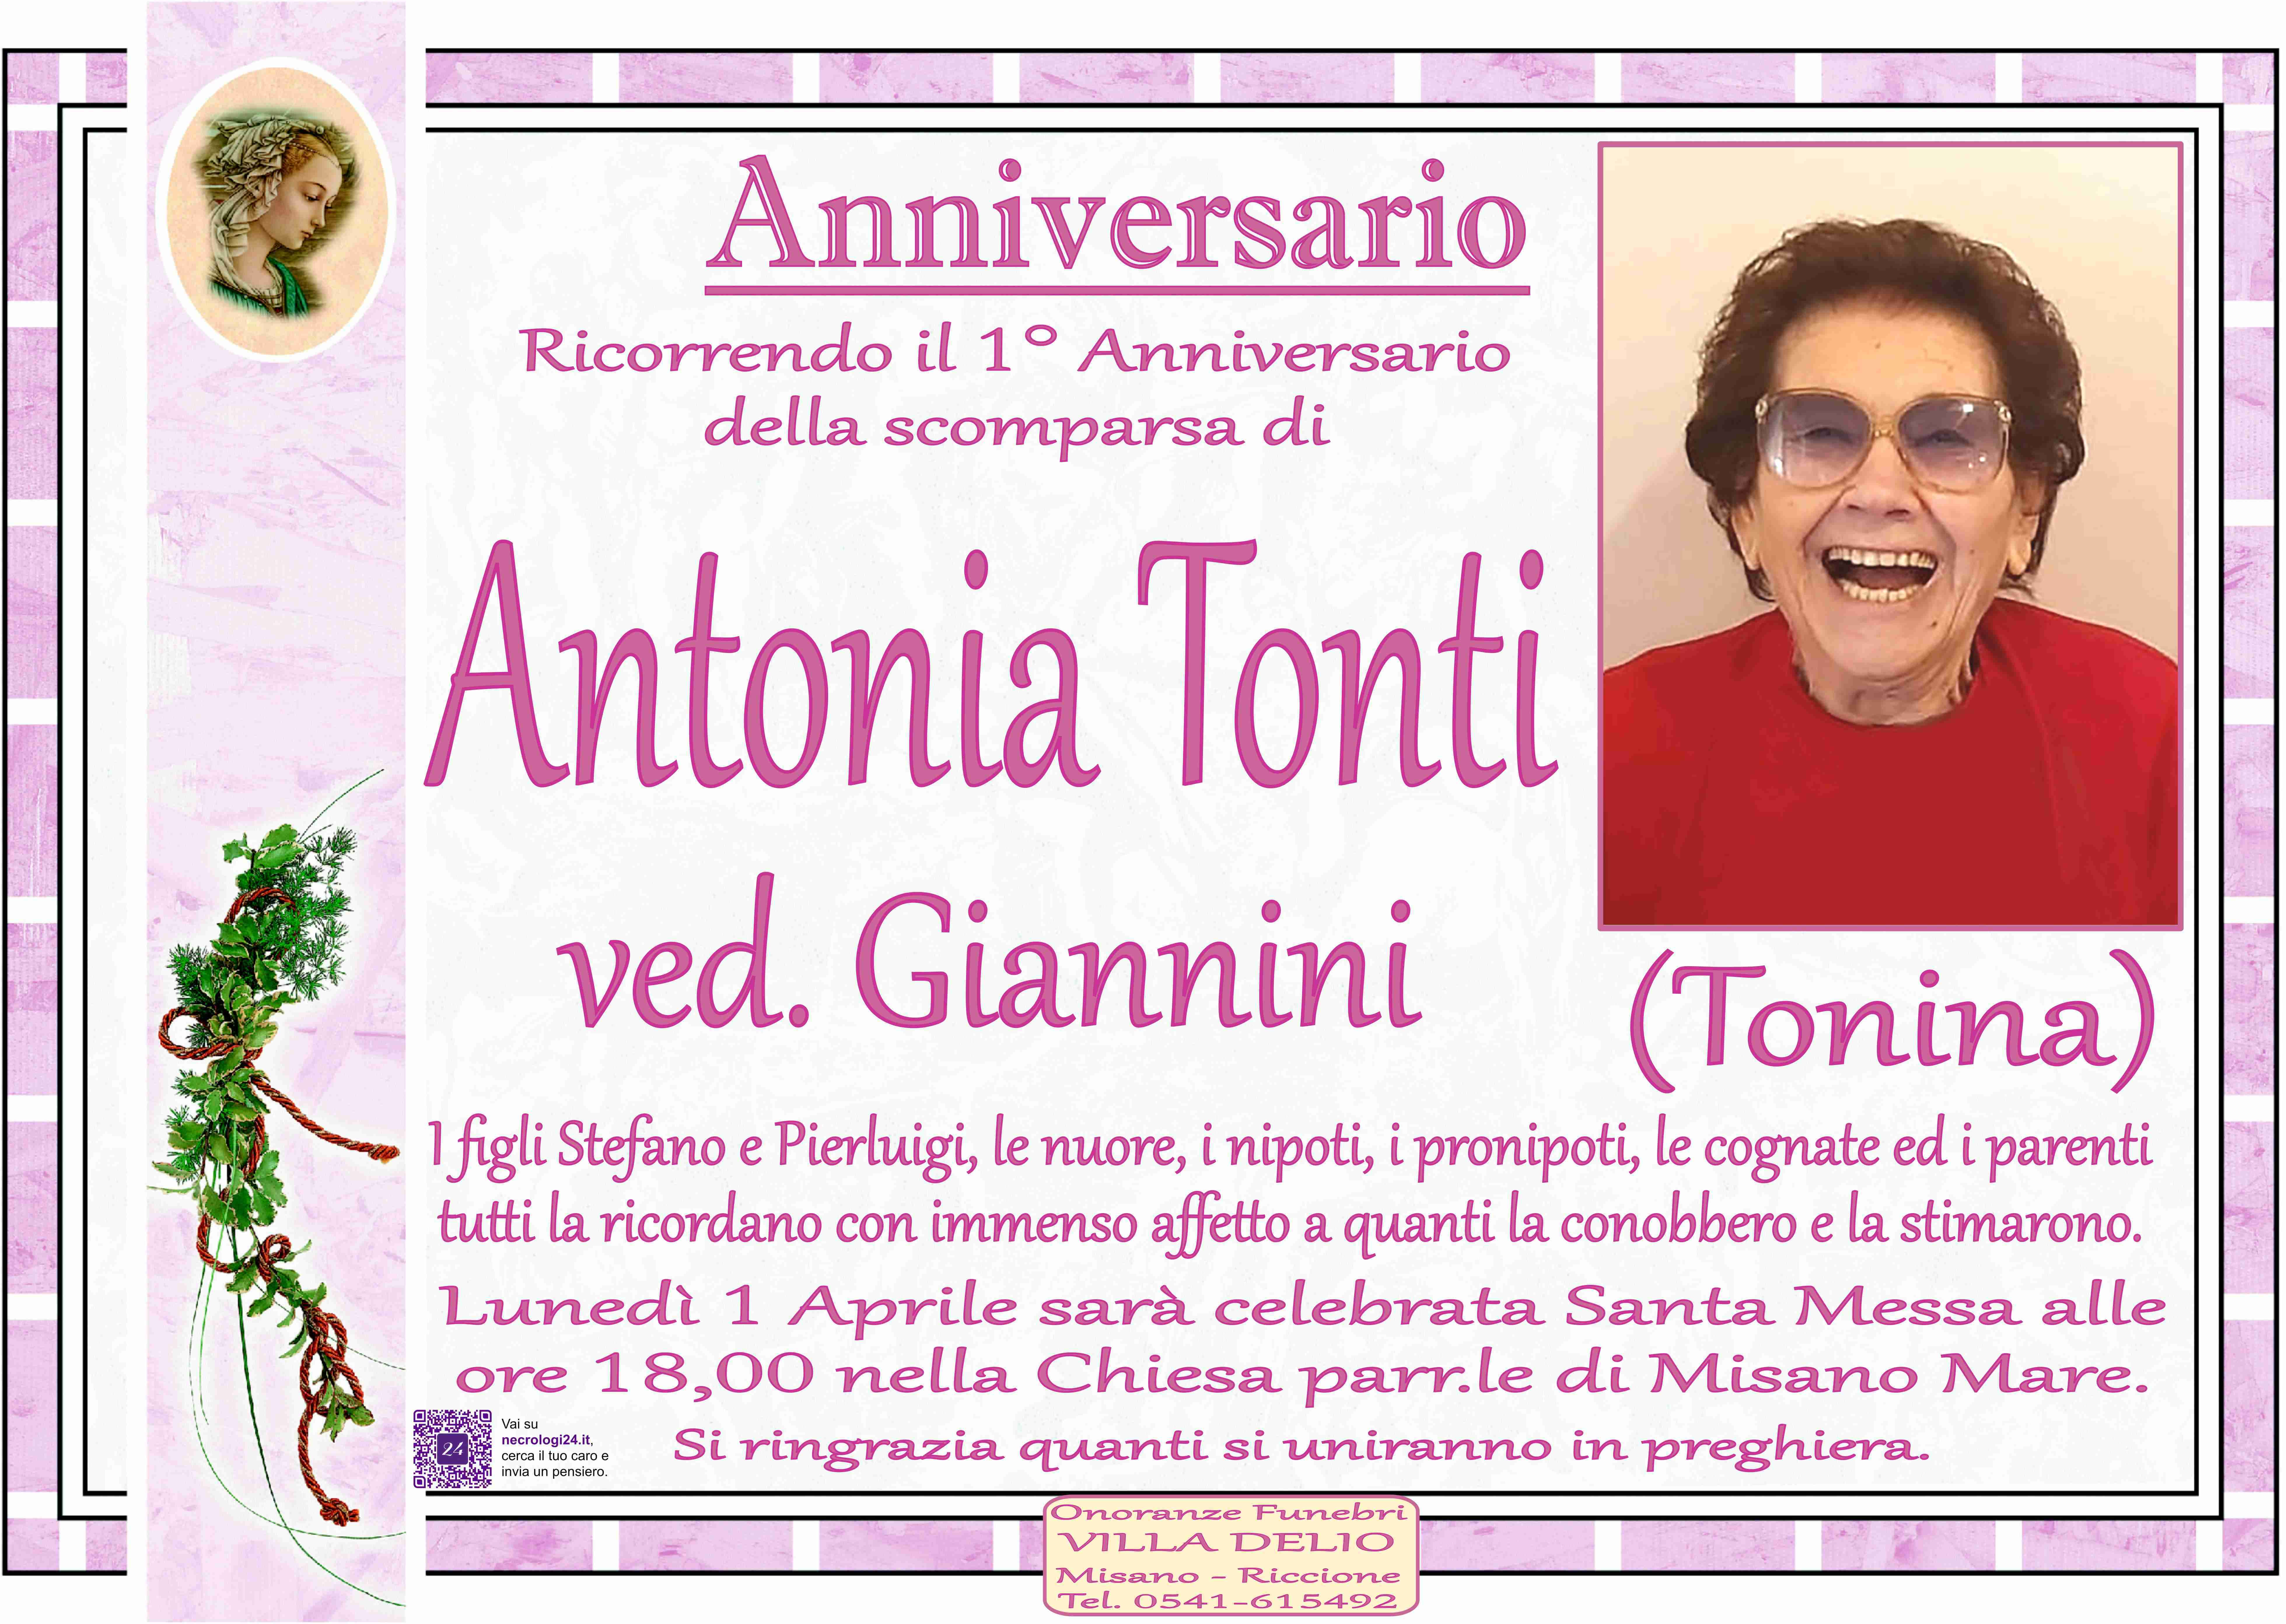 Antonia (Tonina) Tonti ved. Giannini